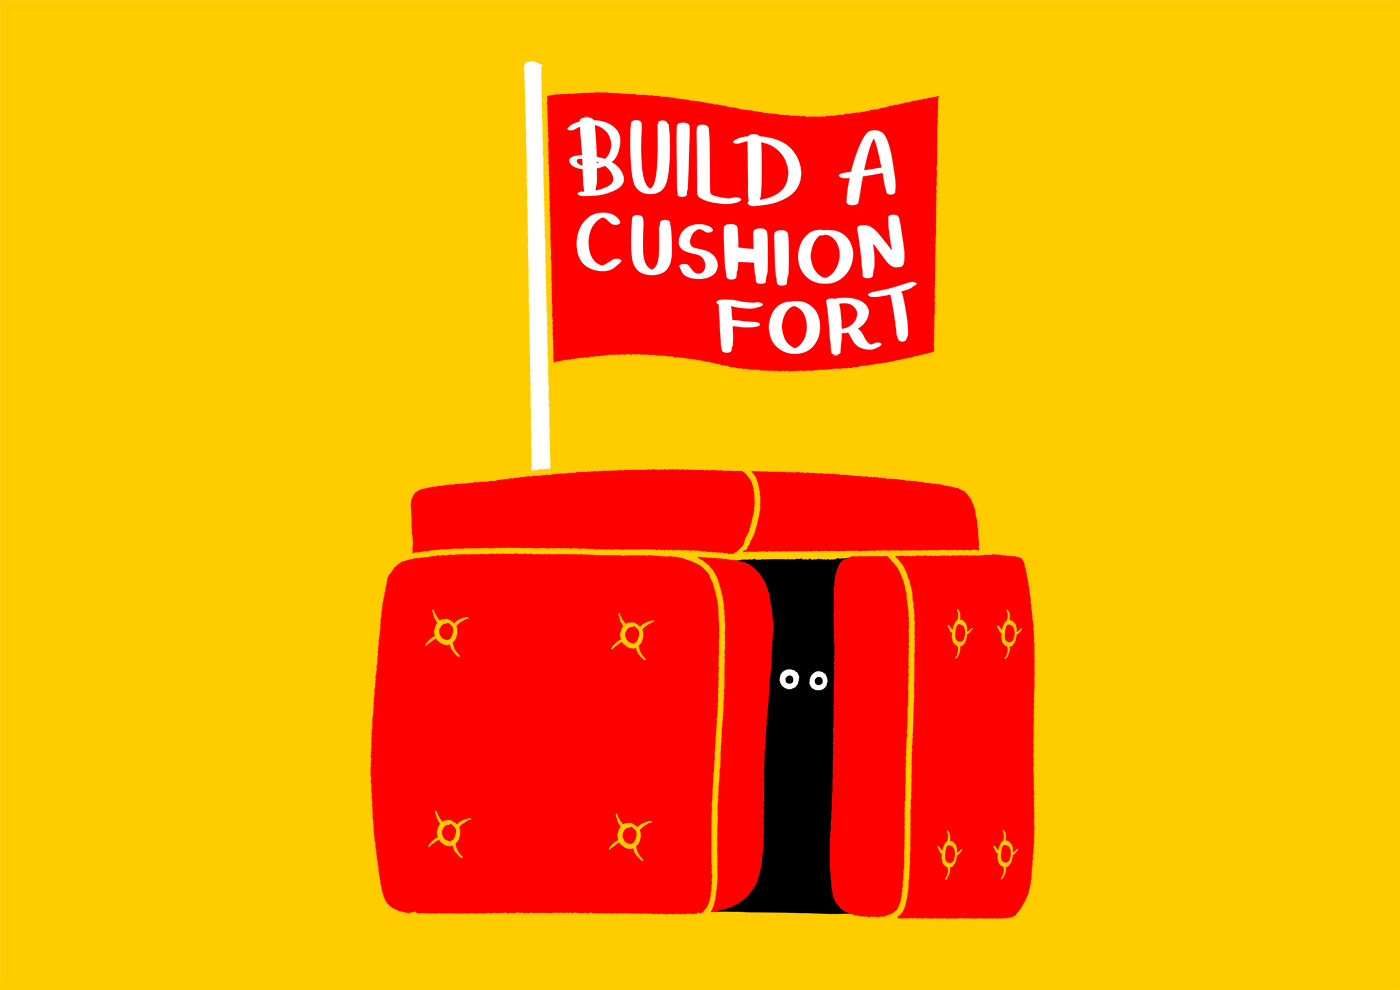 Build a cushion fort